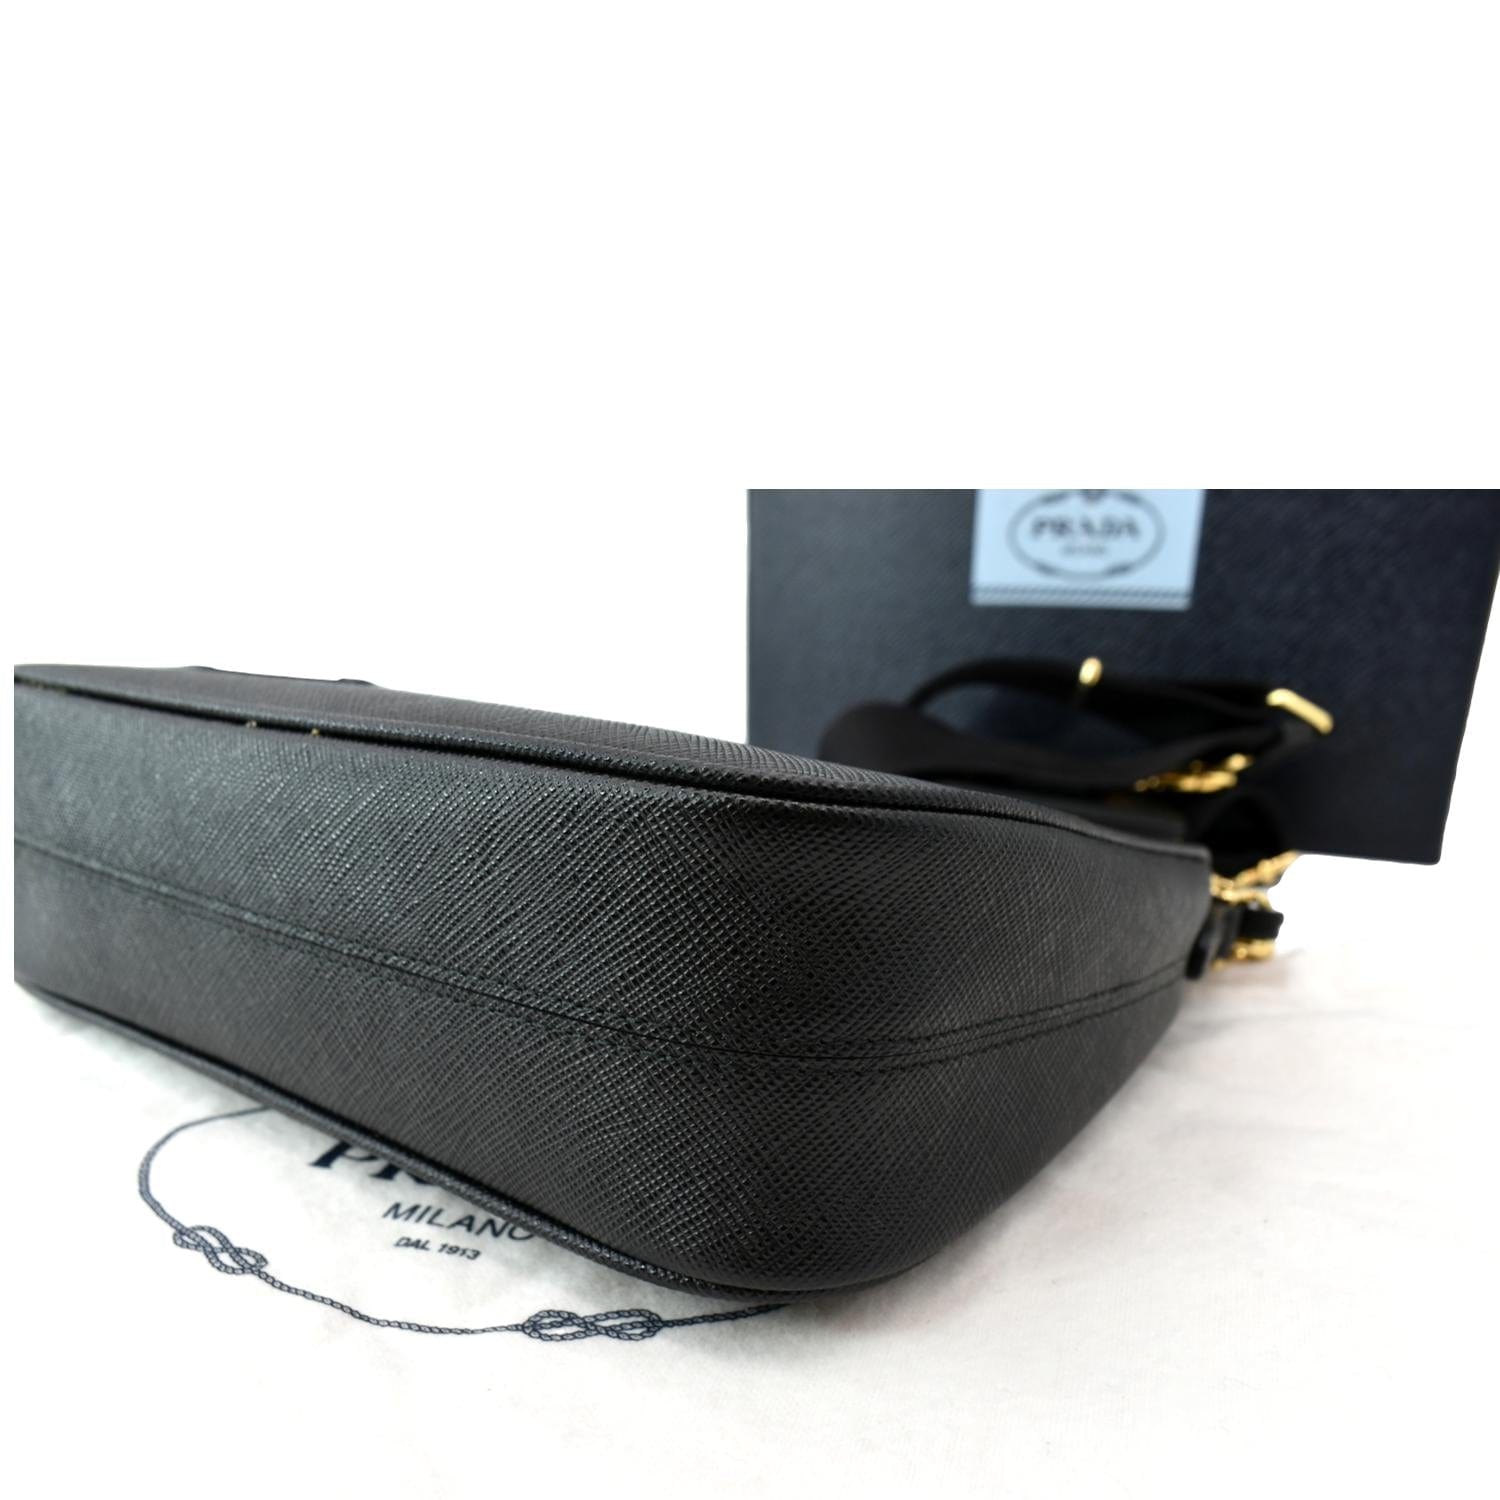 Prada Saffiano Leather Re-Edition 2005 Shoulder Bag - Black - One Size